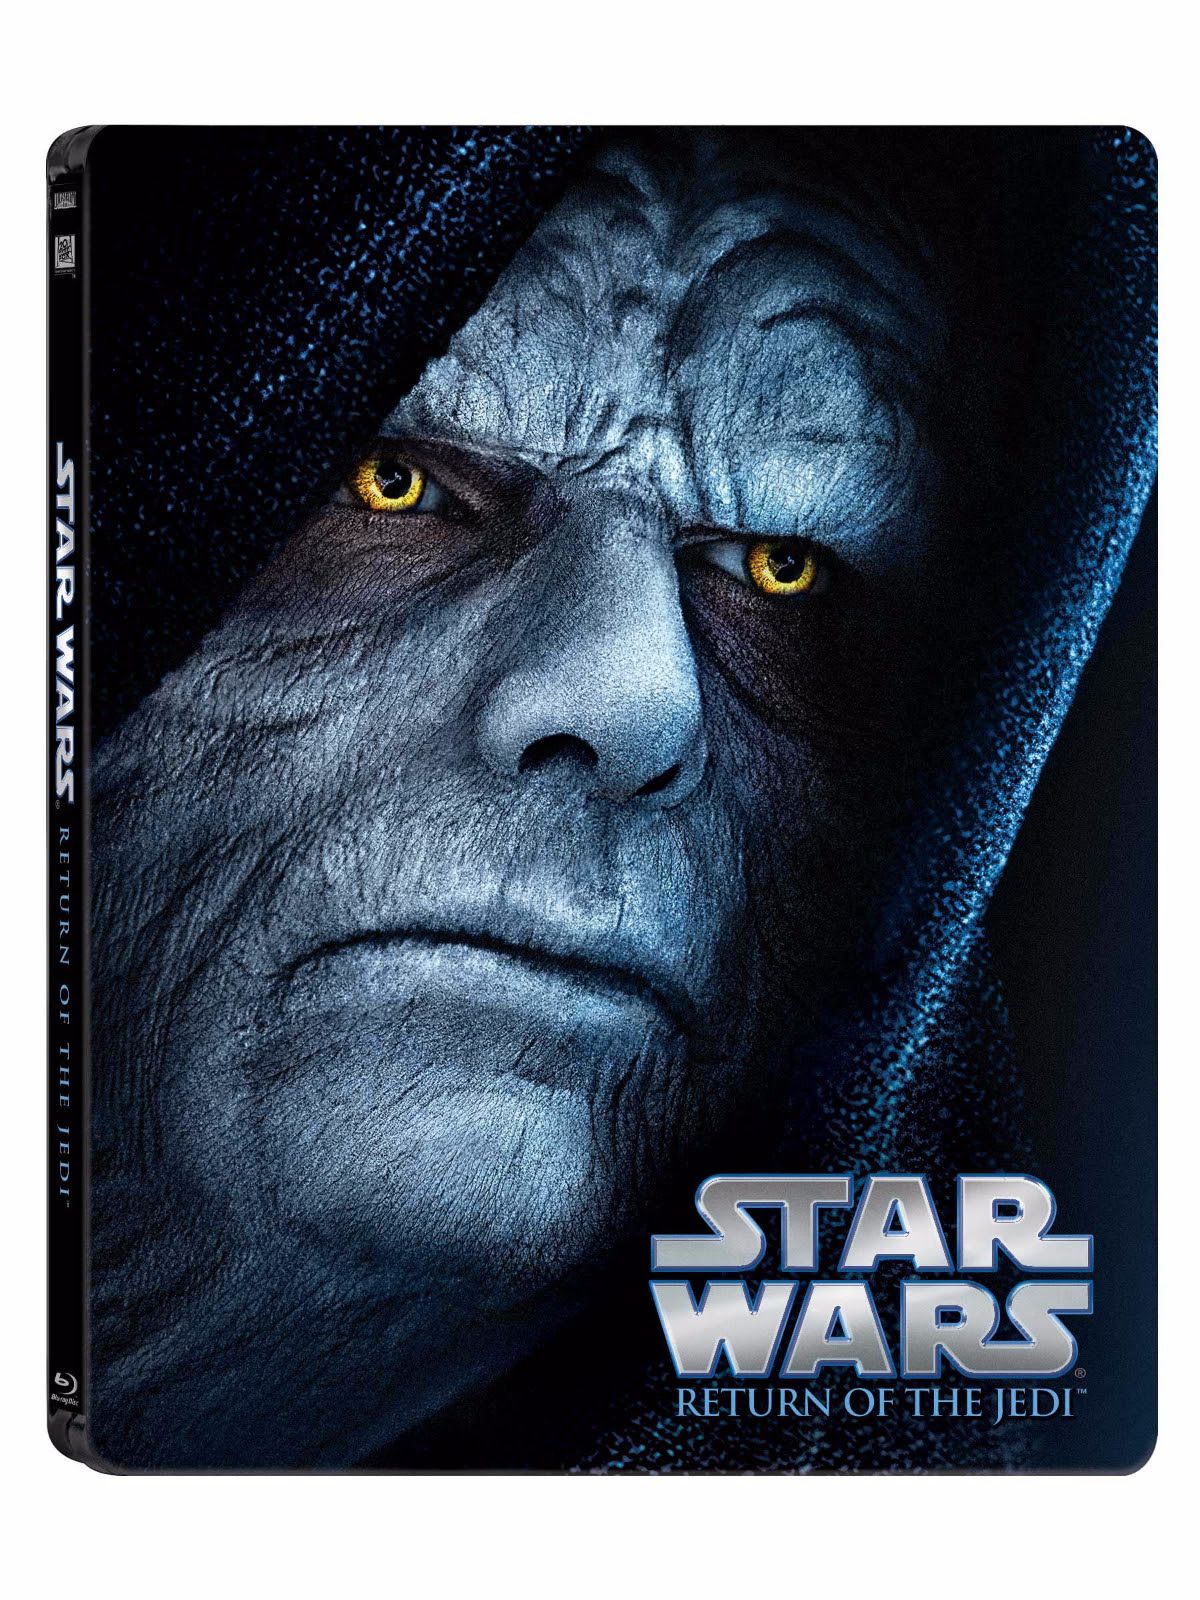 Star Wars Blu-ray Steelbooks Empire Strikes Back